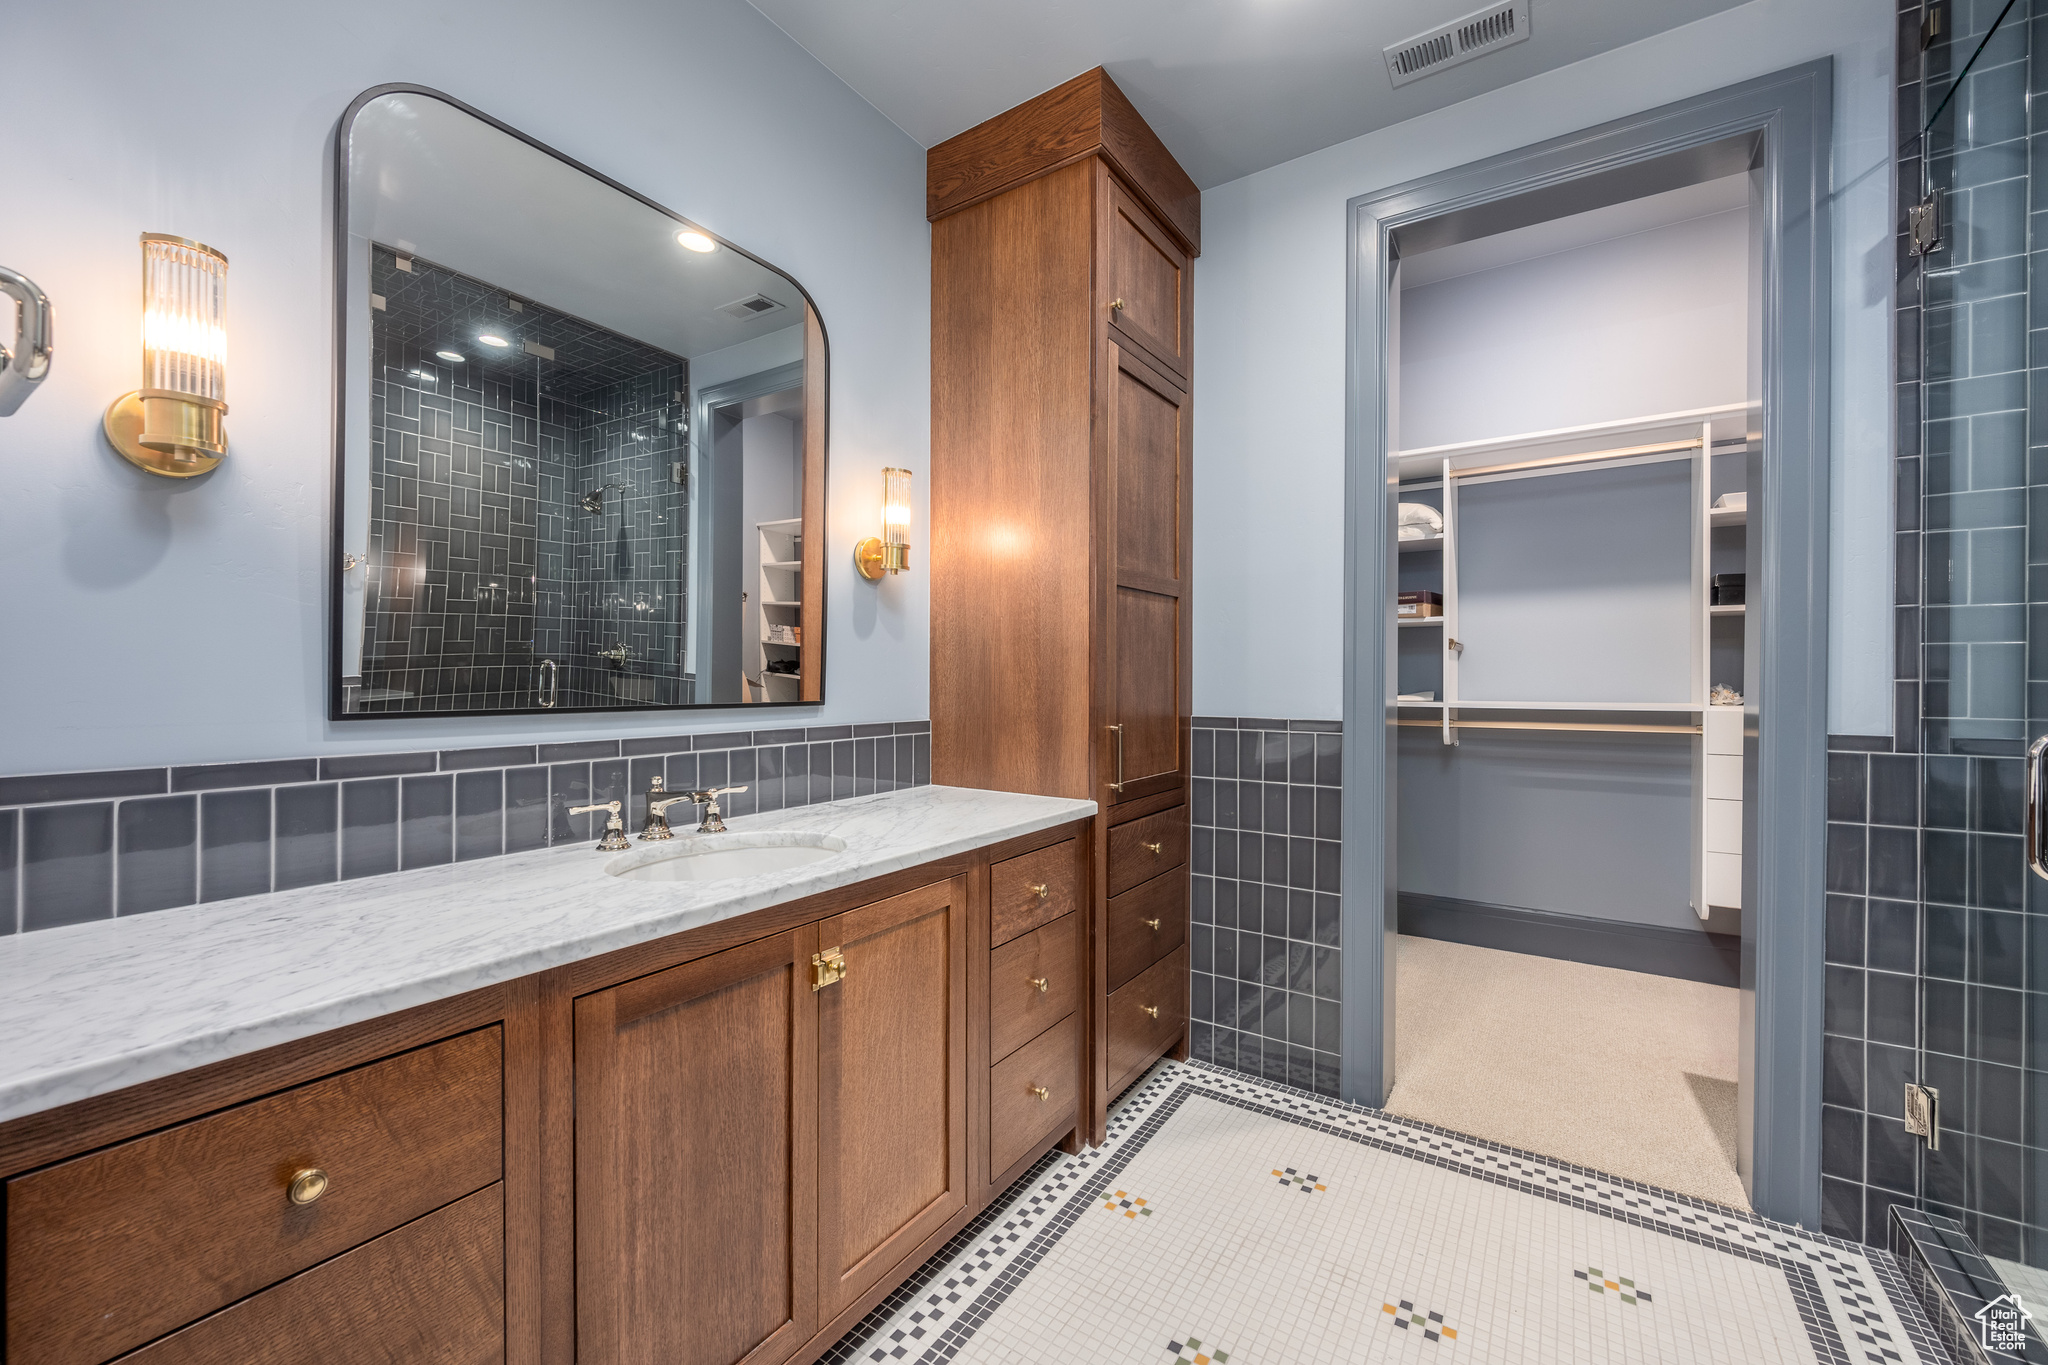 Bathroom with large vanity, tile walls, tile floors, backsplash, and a shower with door